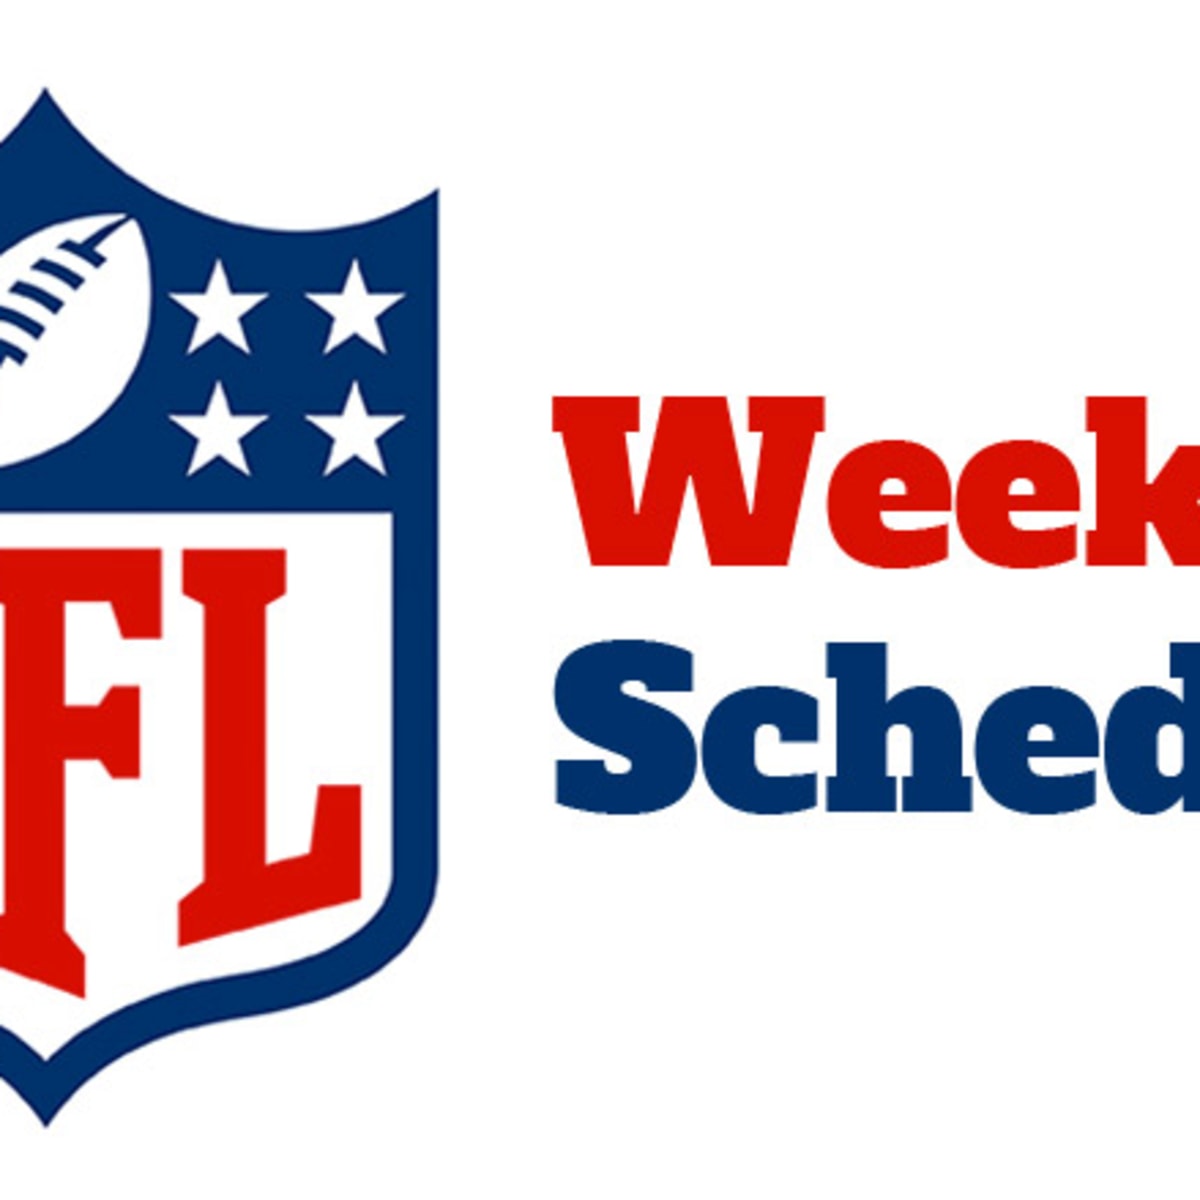 NFL Week 17 Schedule 2022 